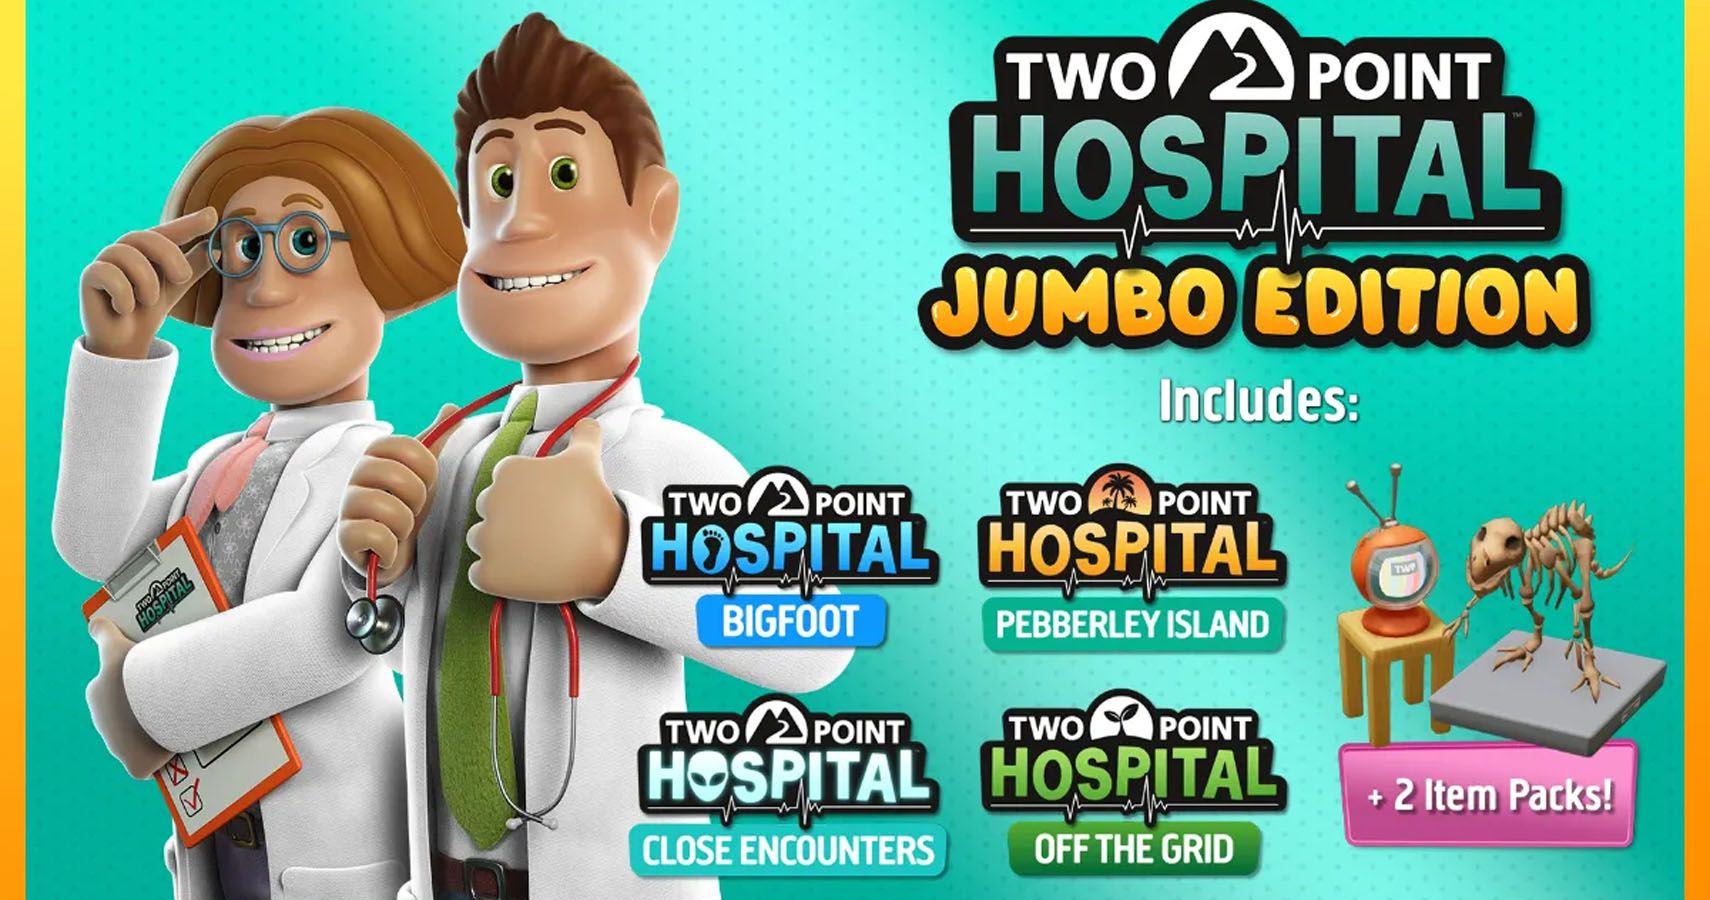 Point Hospital: JUMBO Hits On March 5, 2021